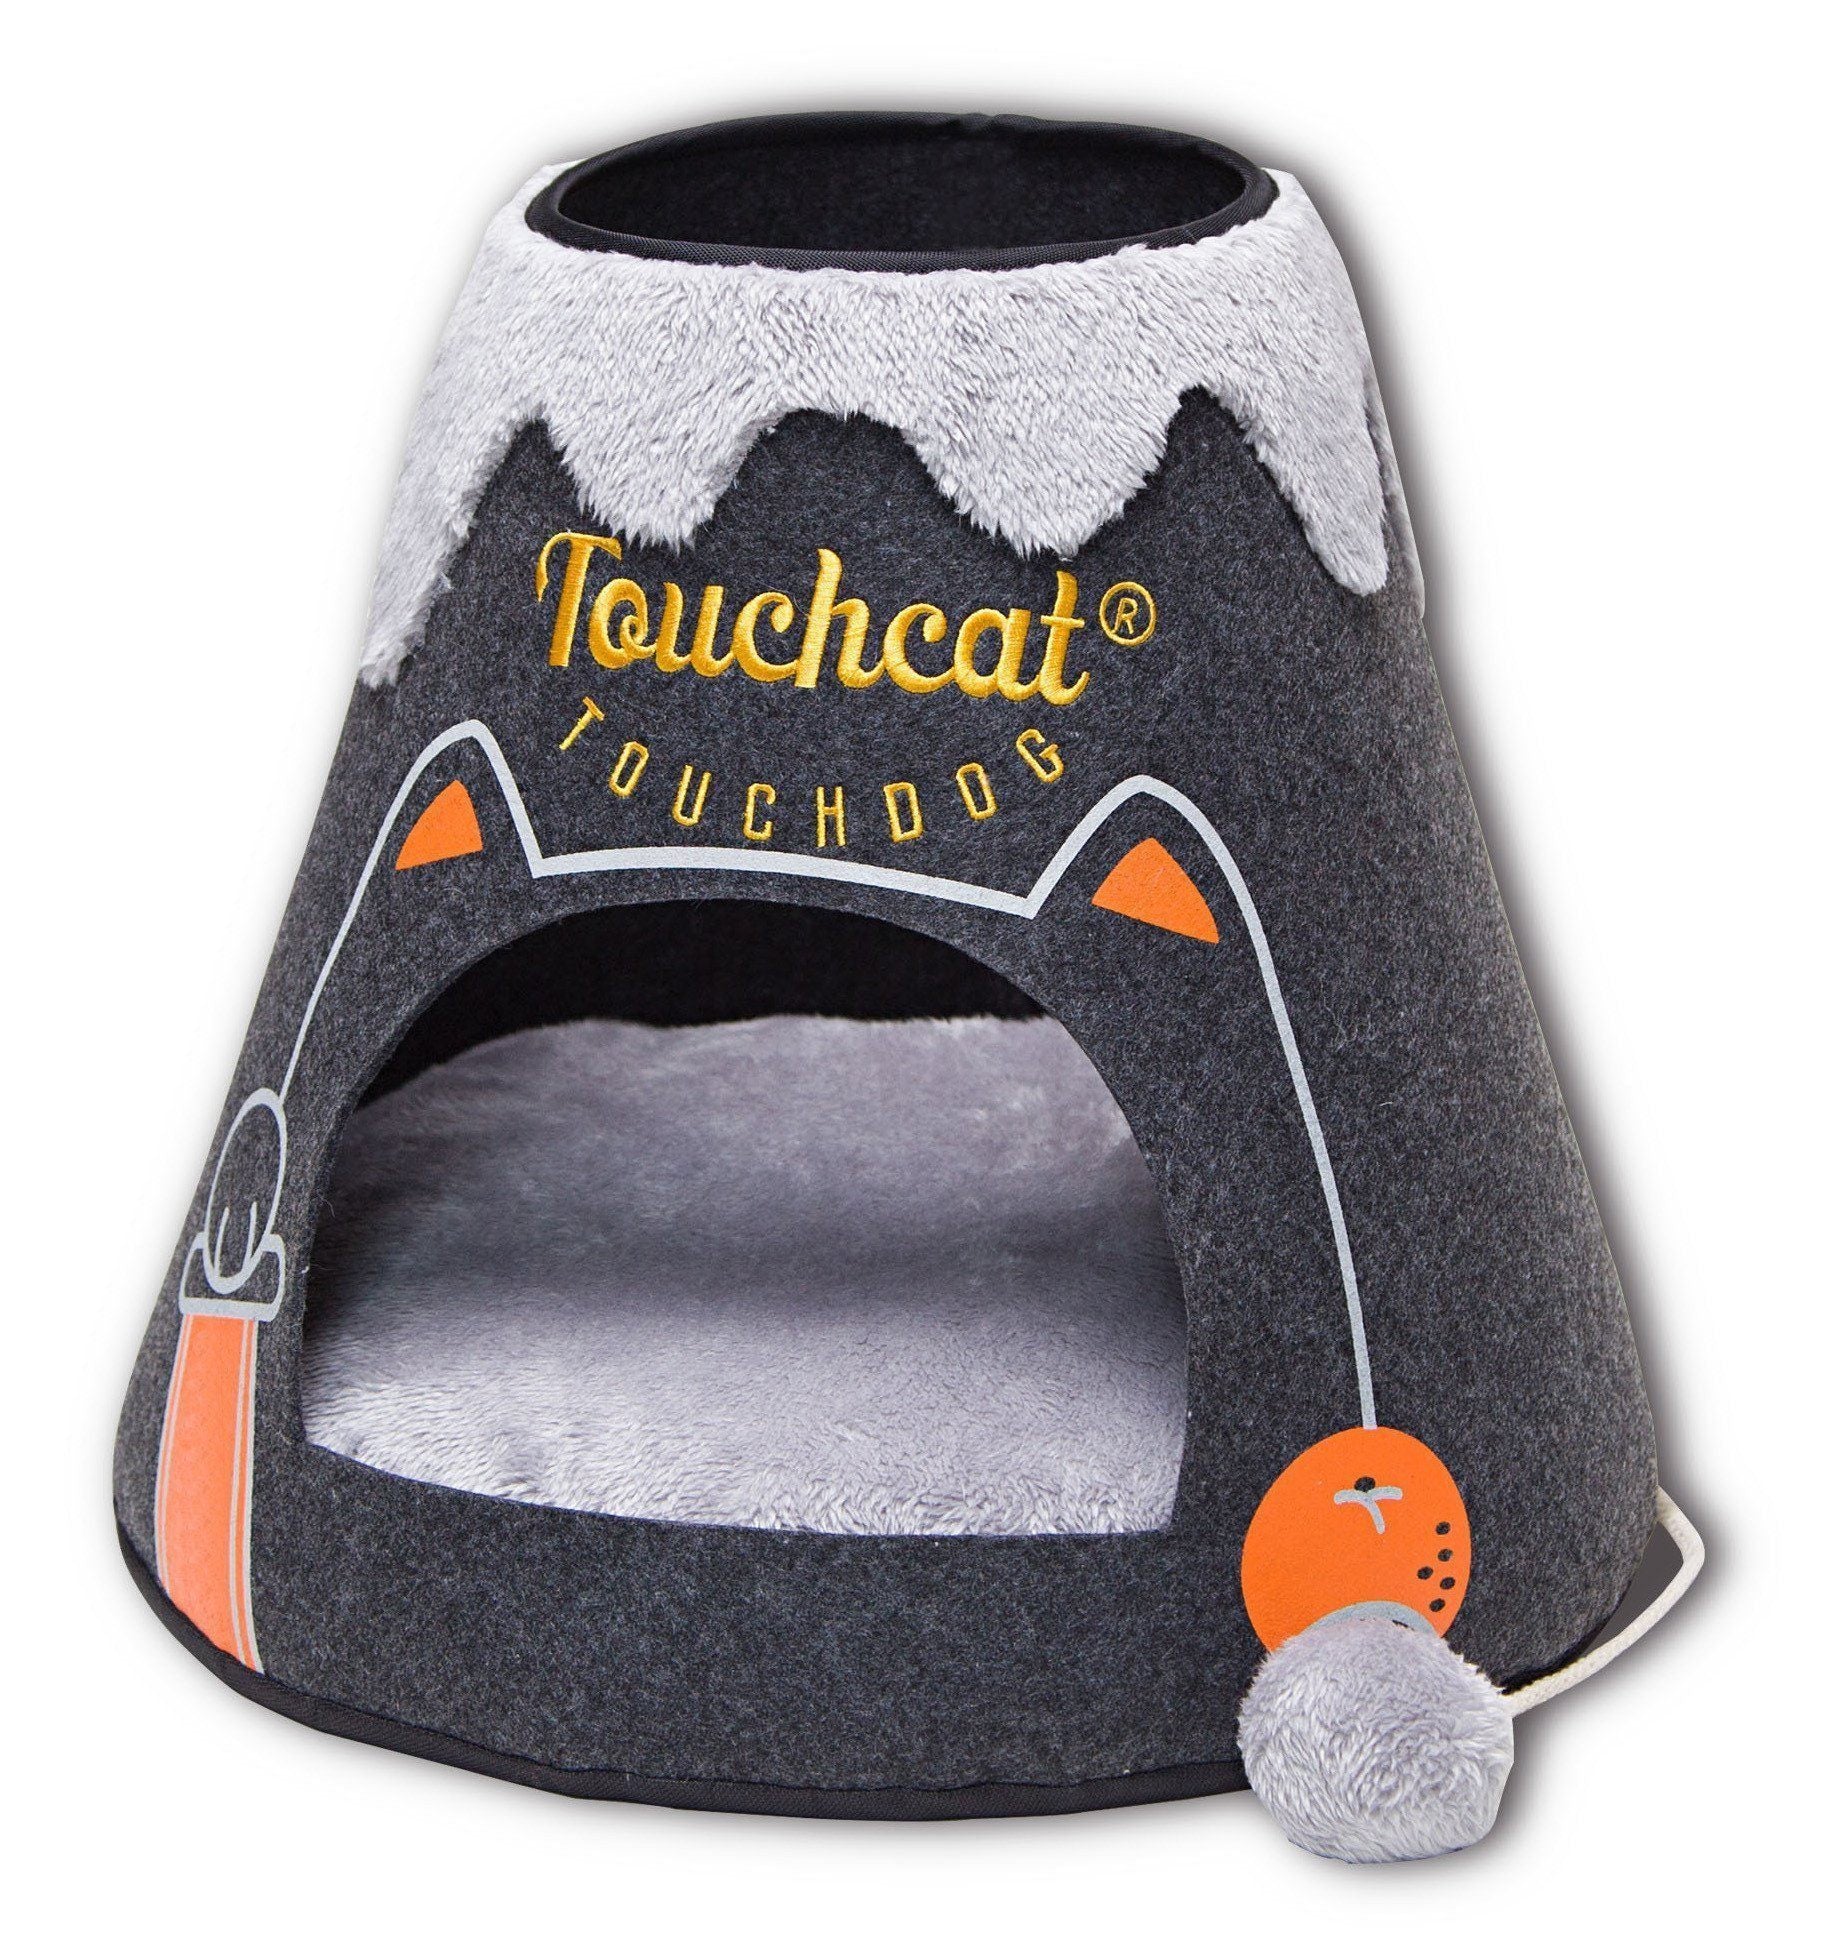 Touchcat ® 'Molten Lava' Triangular Frashion Designer Pet Kitty Cat Bed House Lounge Lounger w/ Hanging Teaser Toy Black/White 